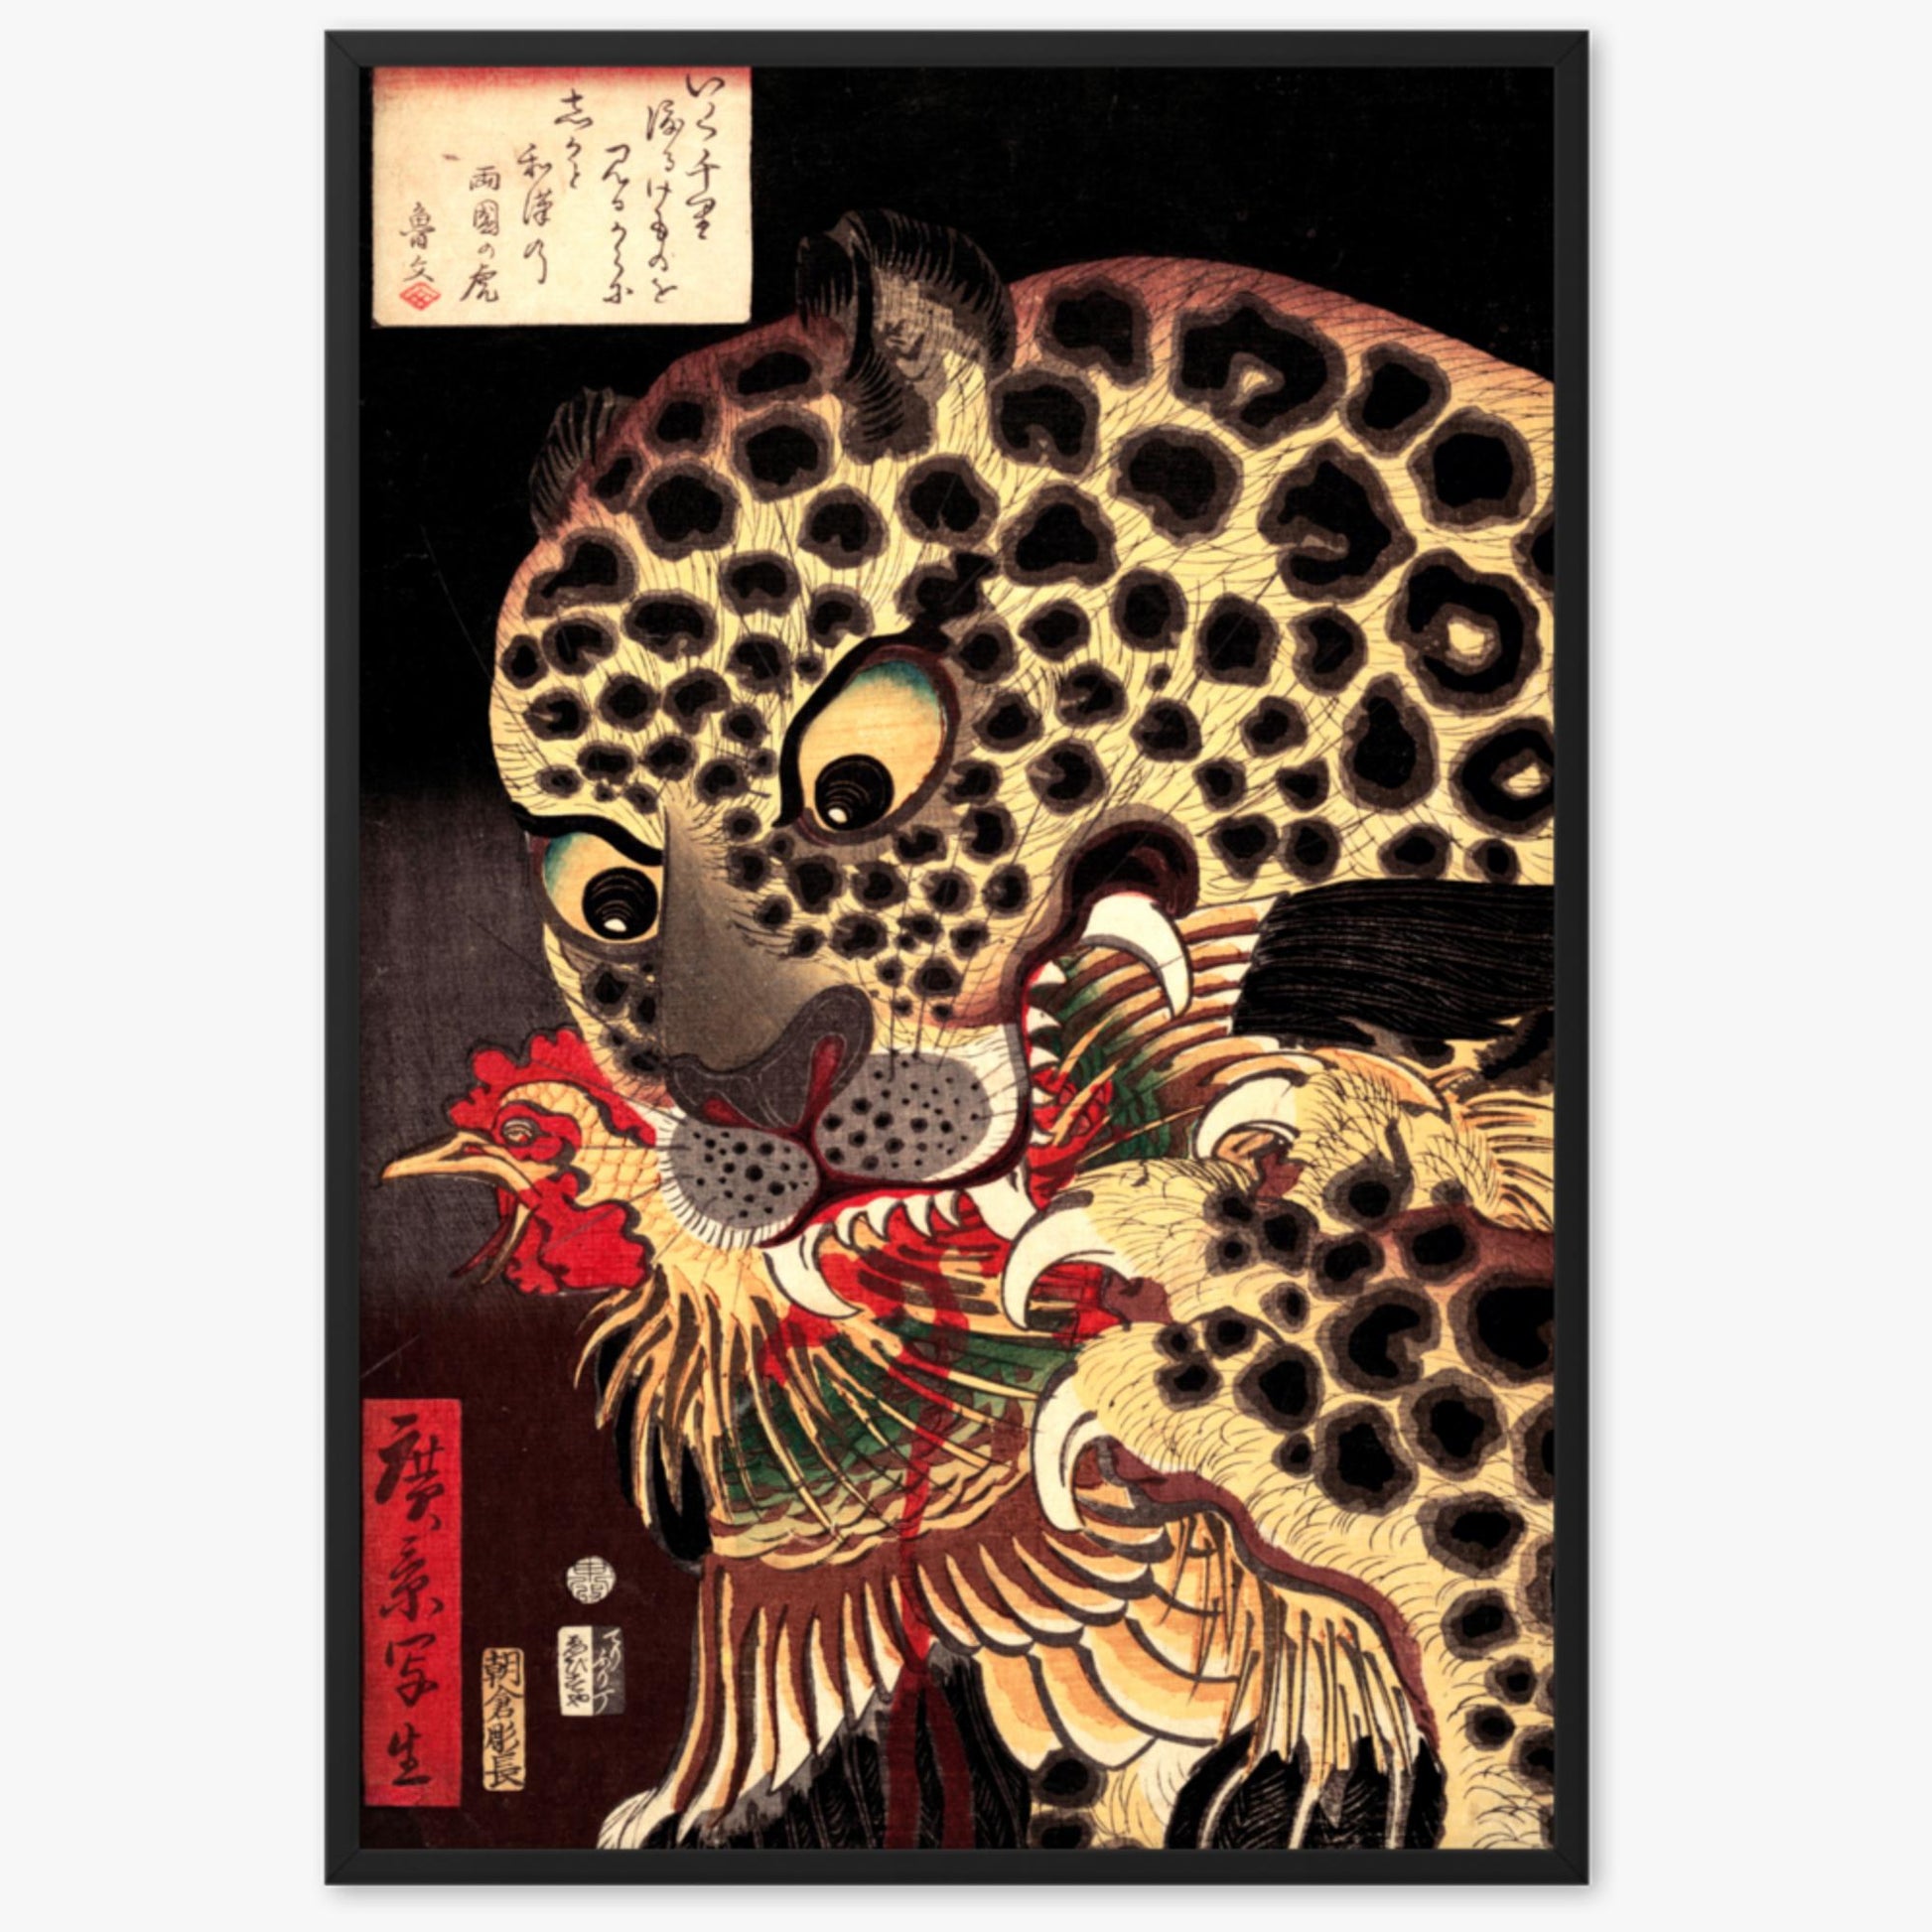 Utagawa Hirokage - The Tiger of Ryōkoku 61x91 cm Poster With Black Frame